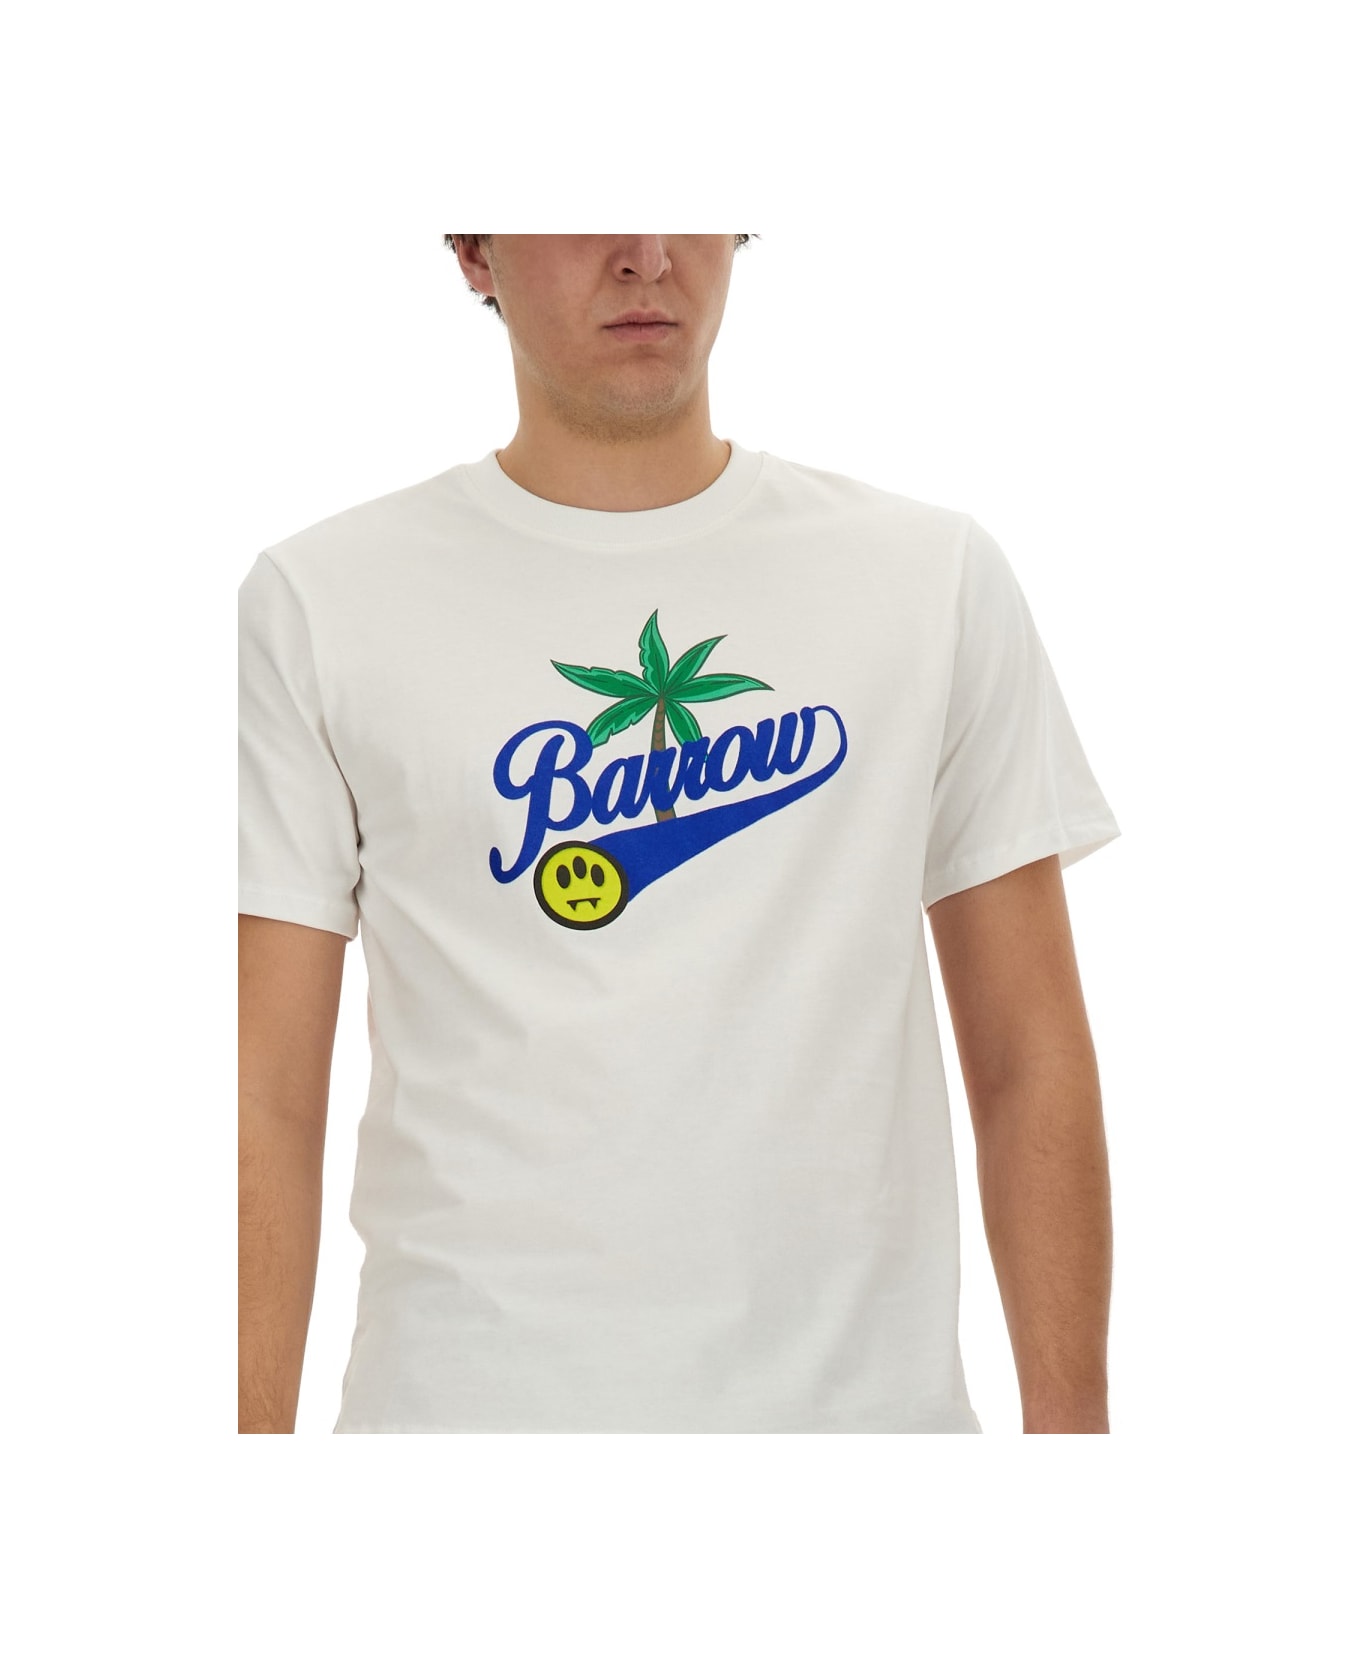 Barrow T-shirt With Logo - WHITE